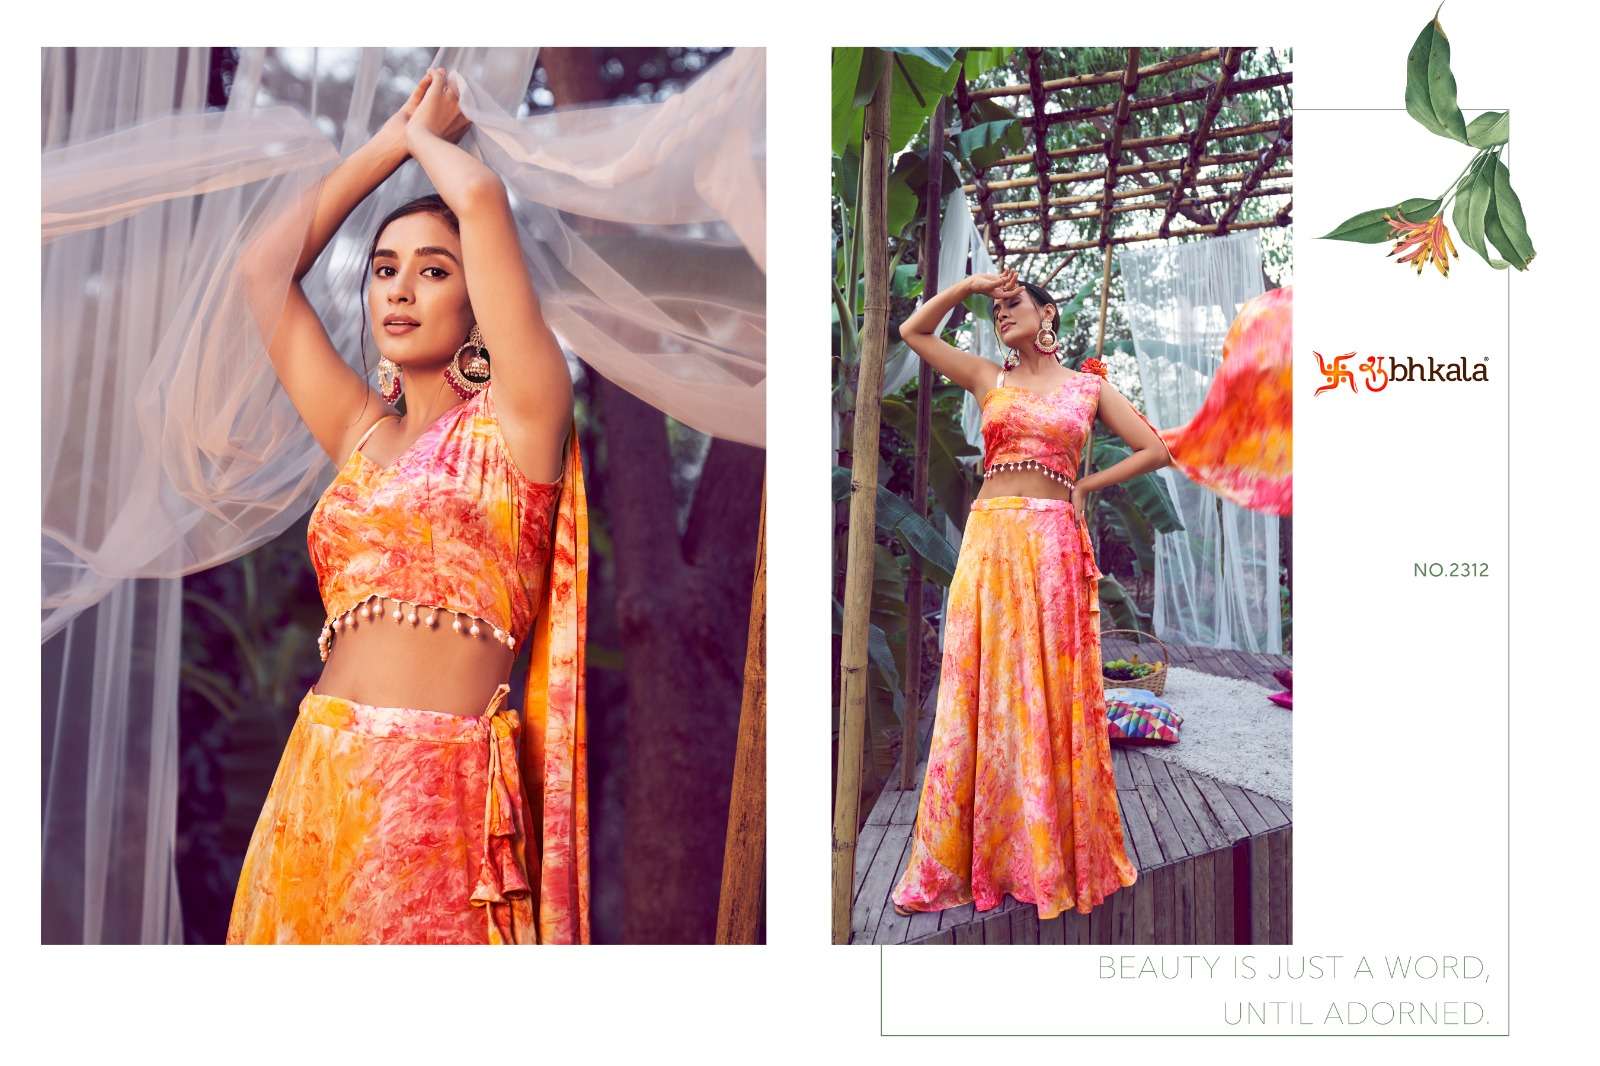 shubhkala girly vol-27 2311-2314 series silk designer lehenga choli with fancy dupatta collection surat